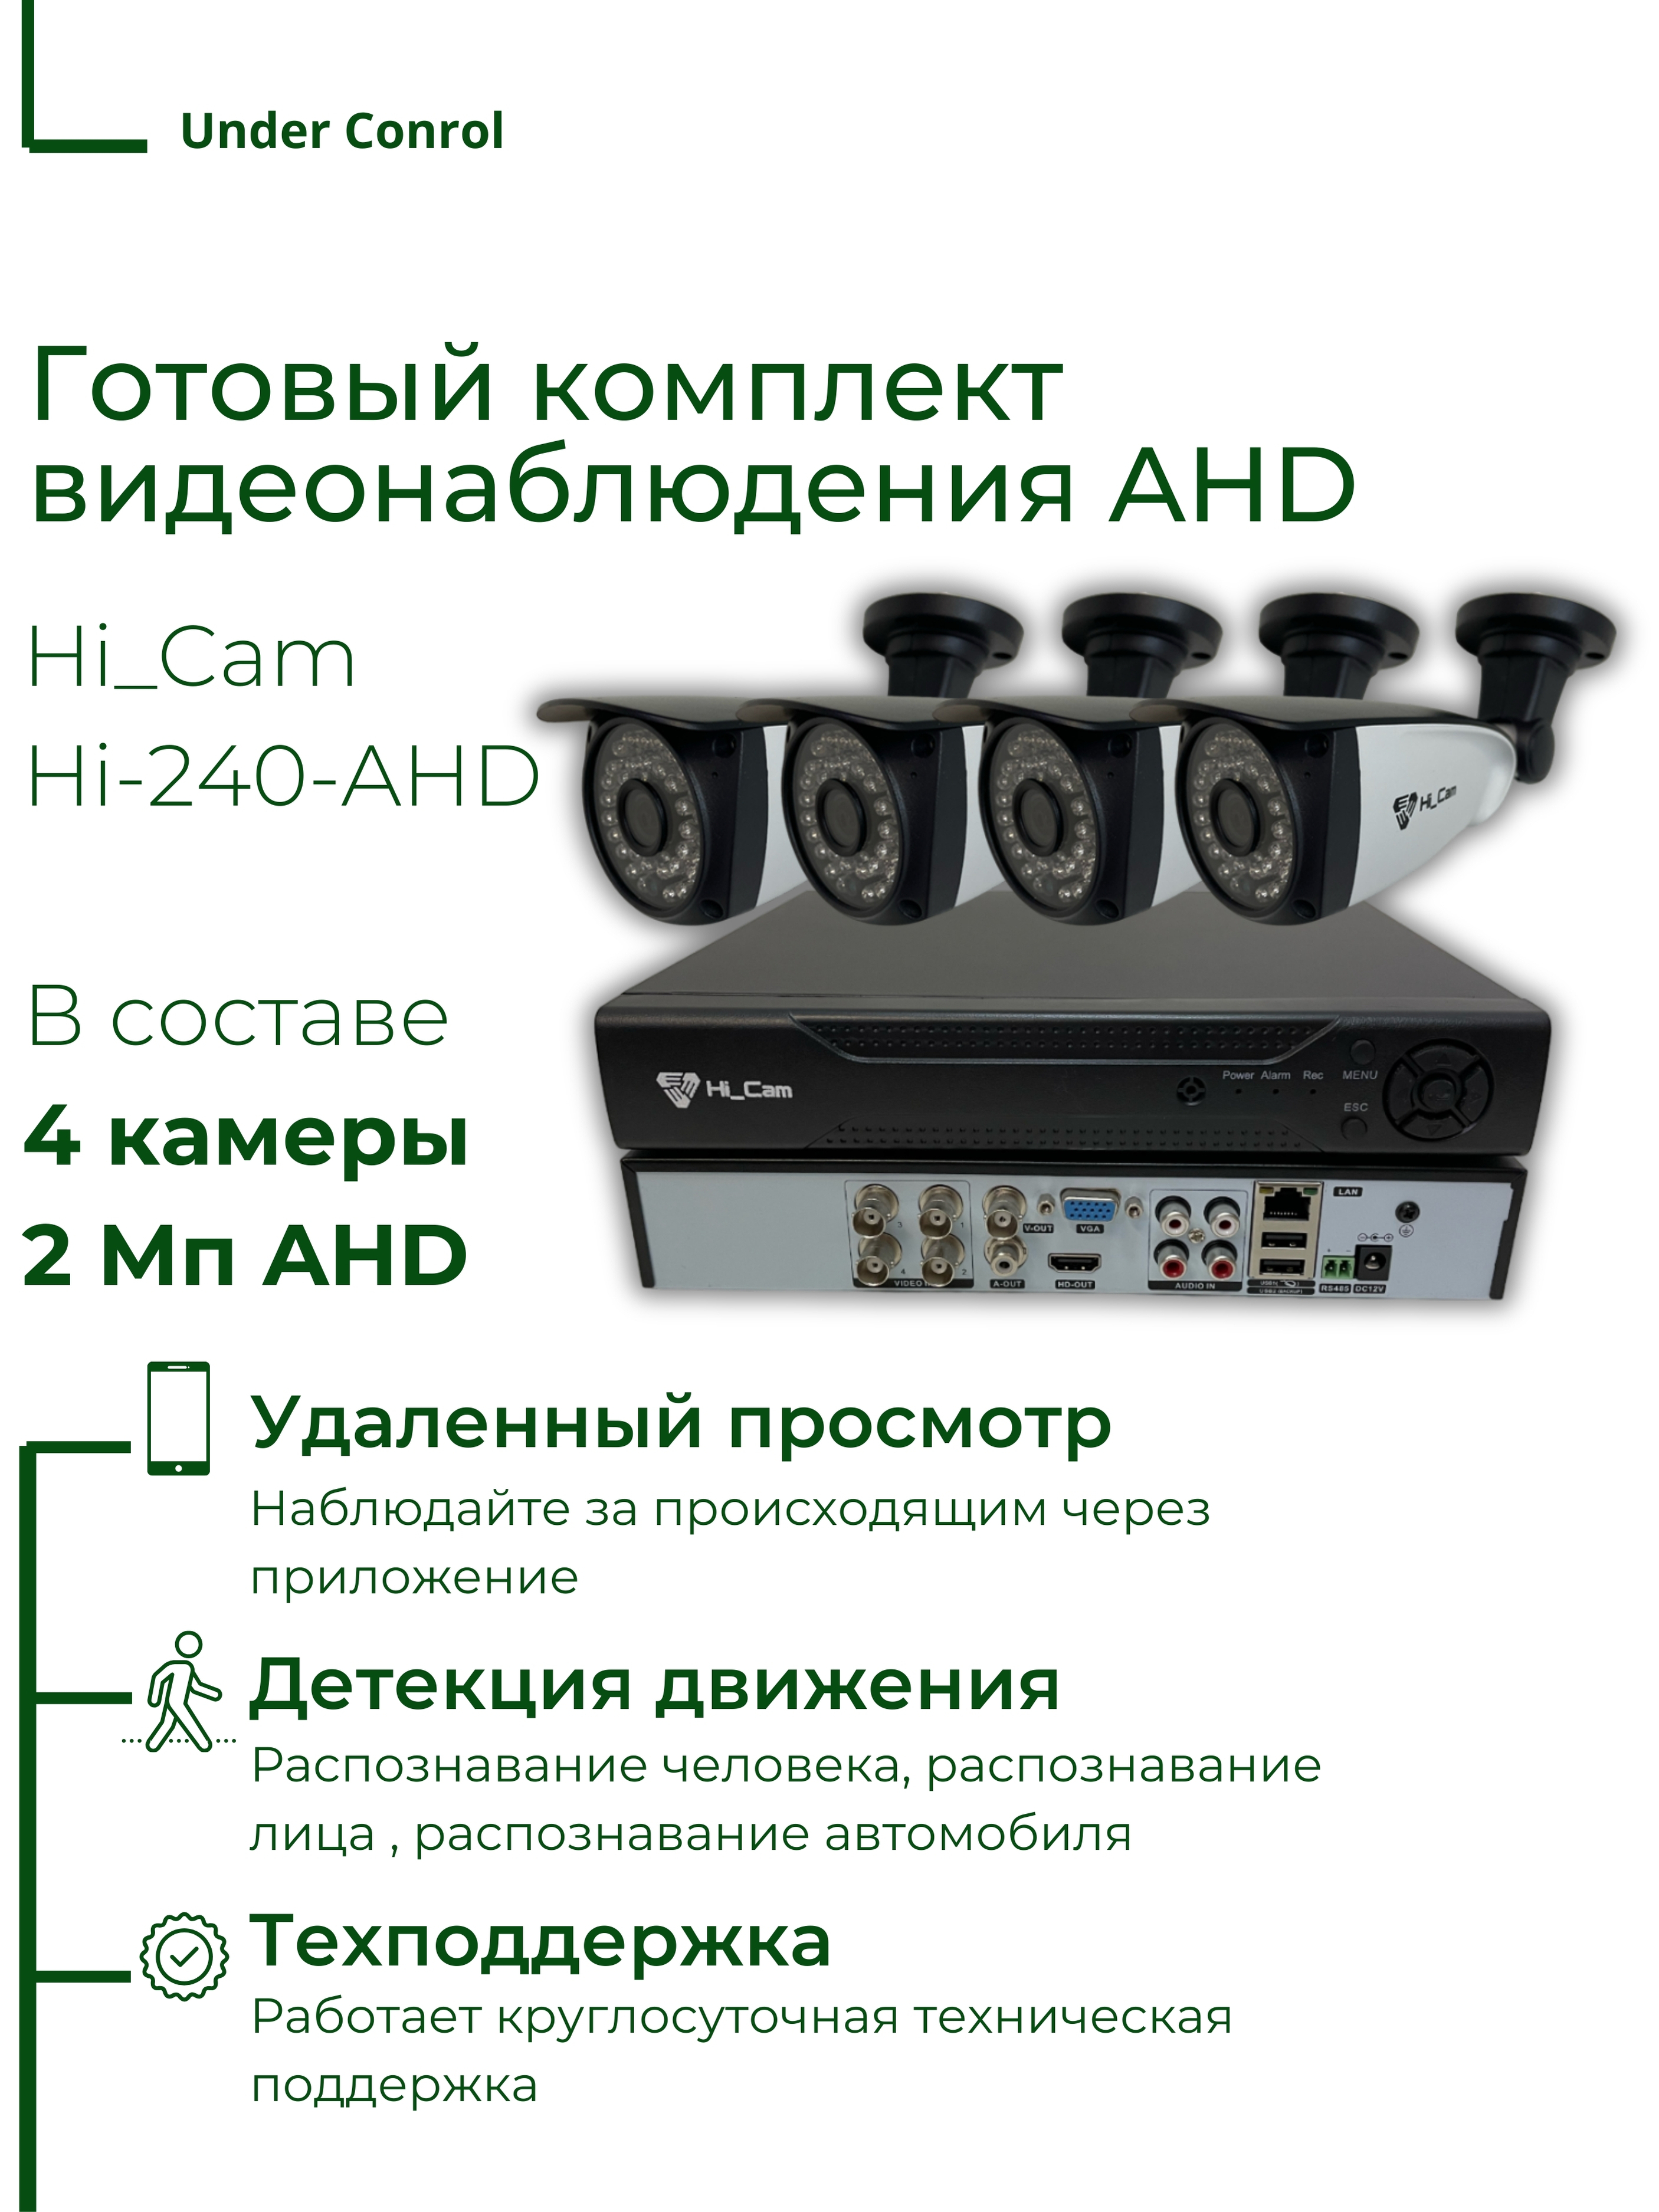 Комплект видеонаблюдения Hi_Cam Hi-240AHD